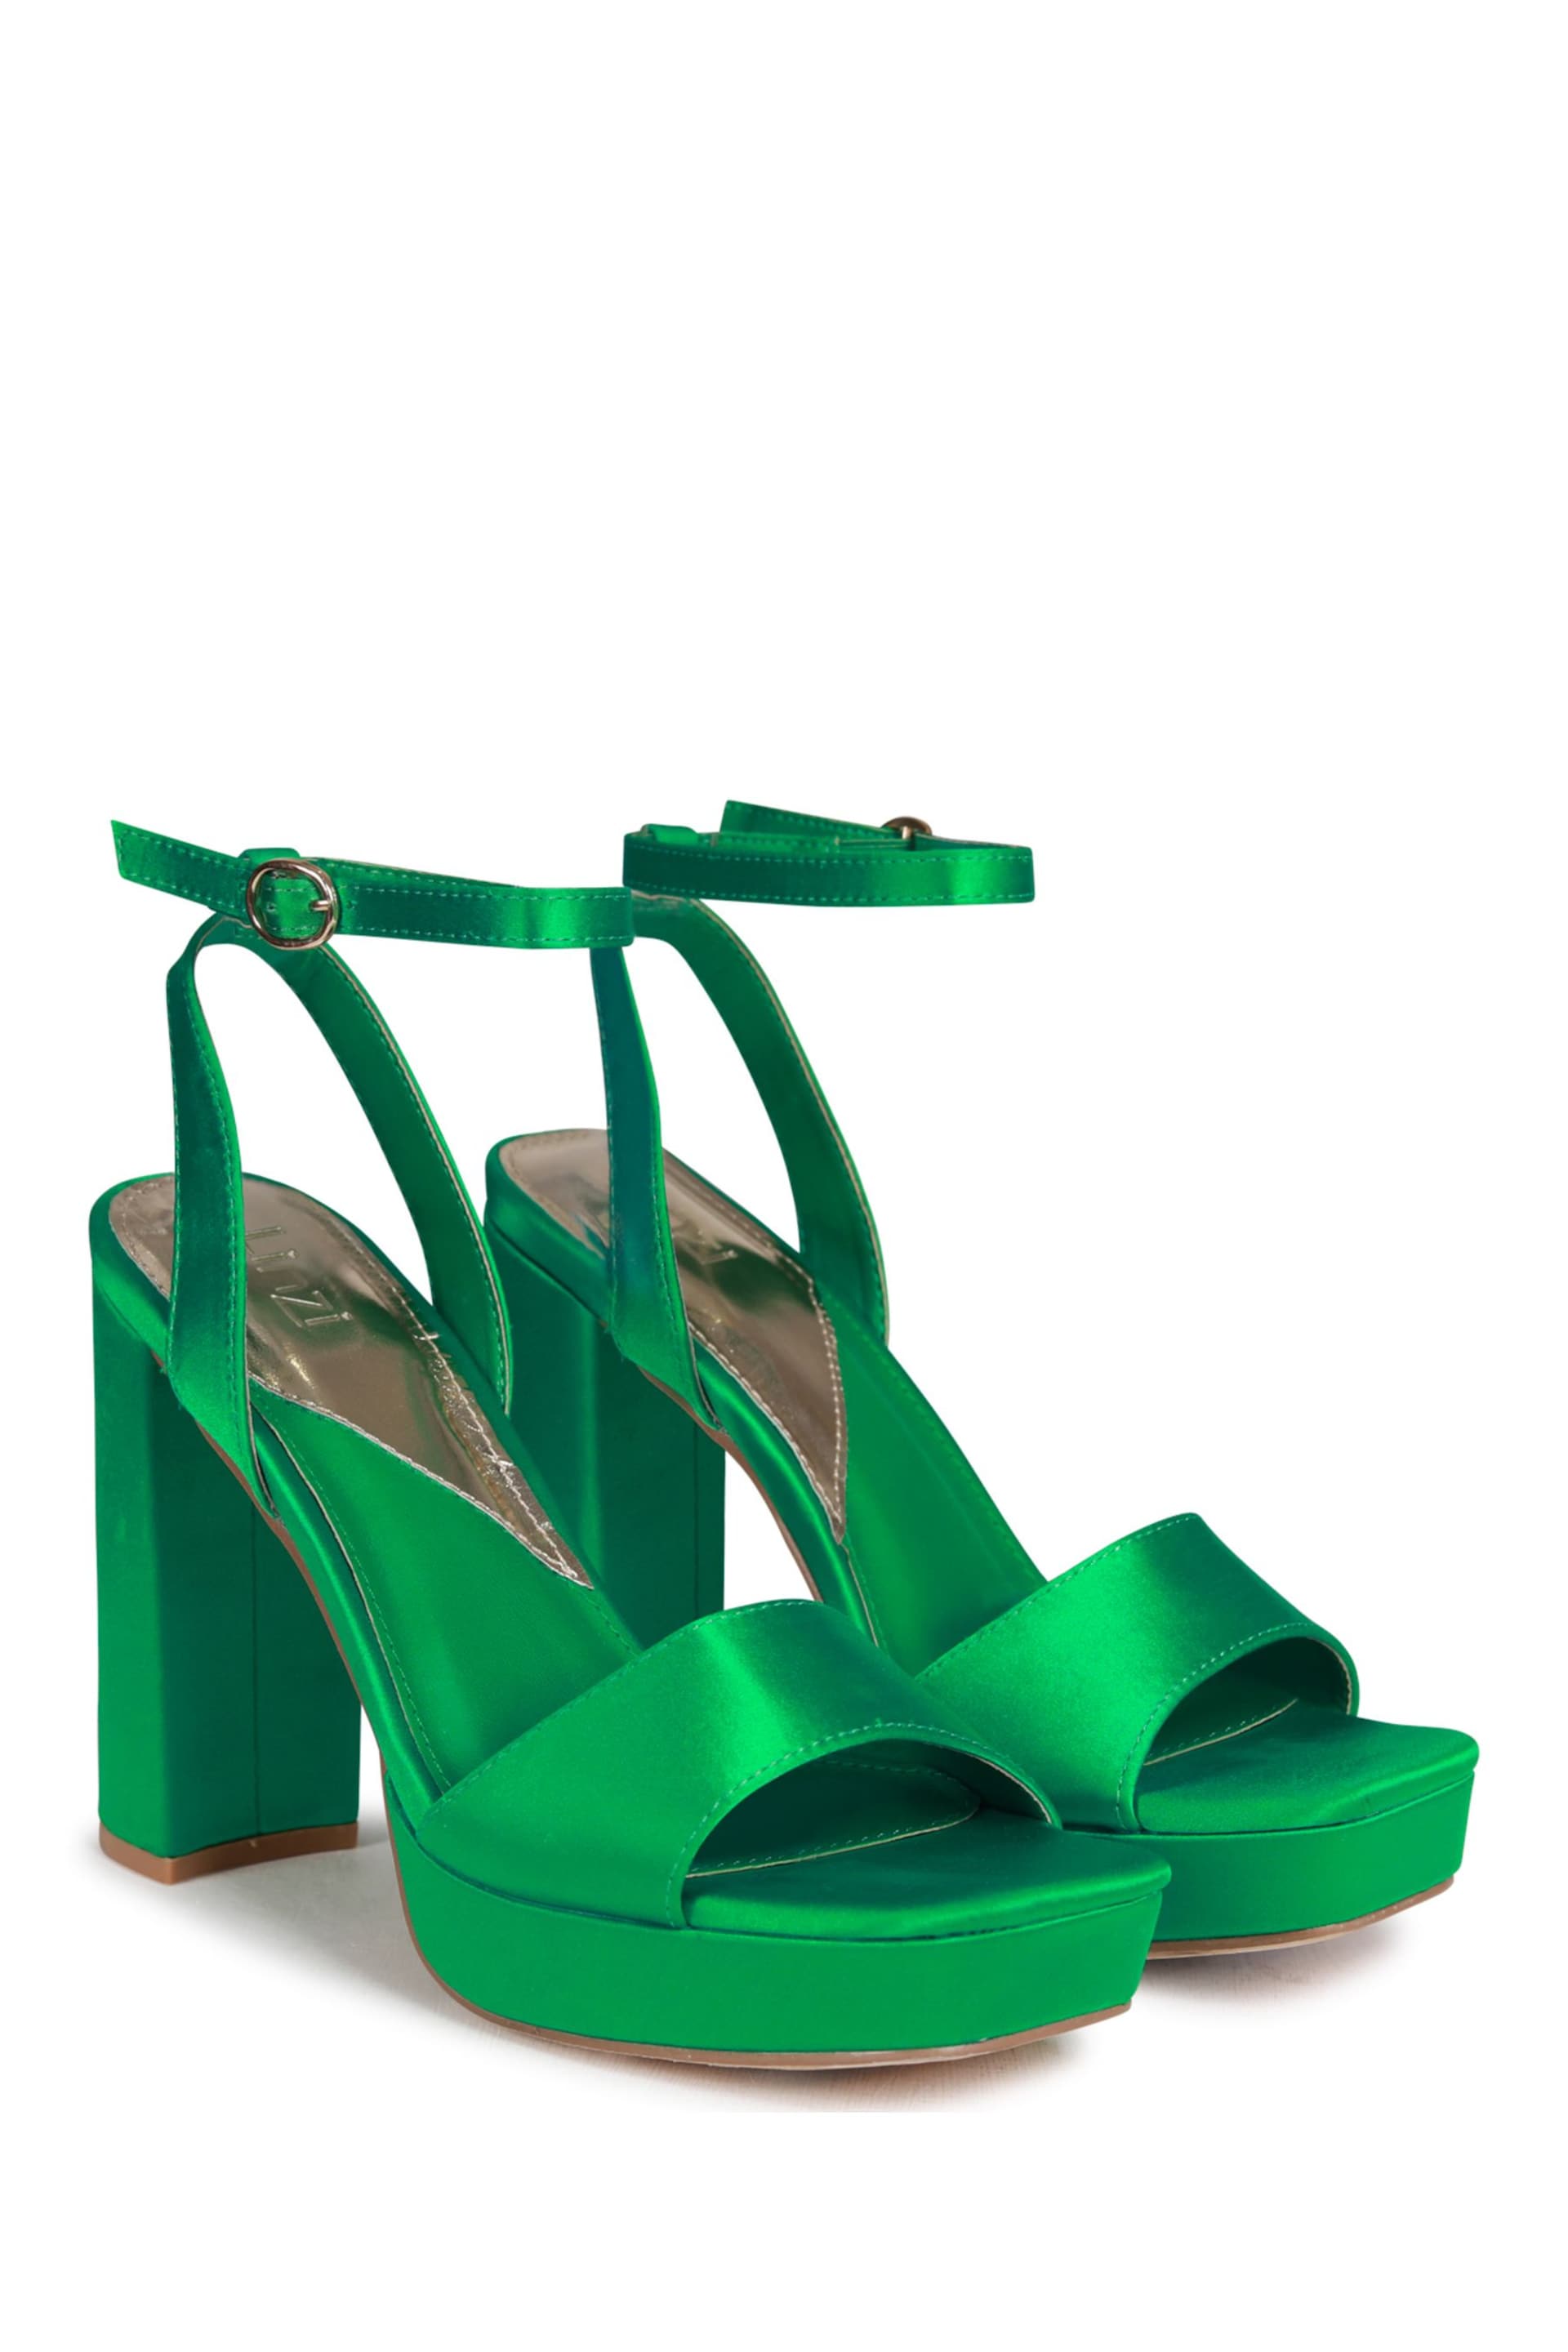 Linzi Green Gloria Platform Heeled Sandals With Wrap Around Ankle Strap - Image 4 of 4